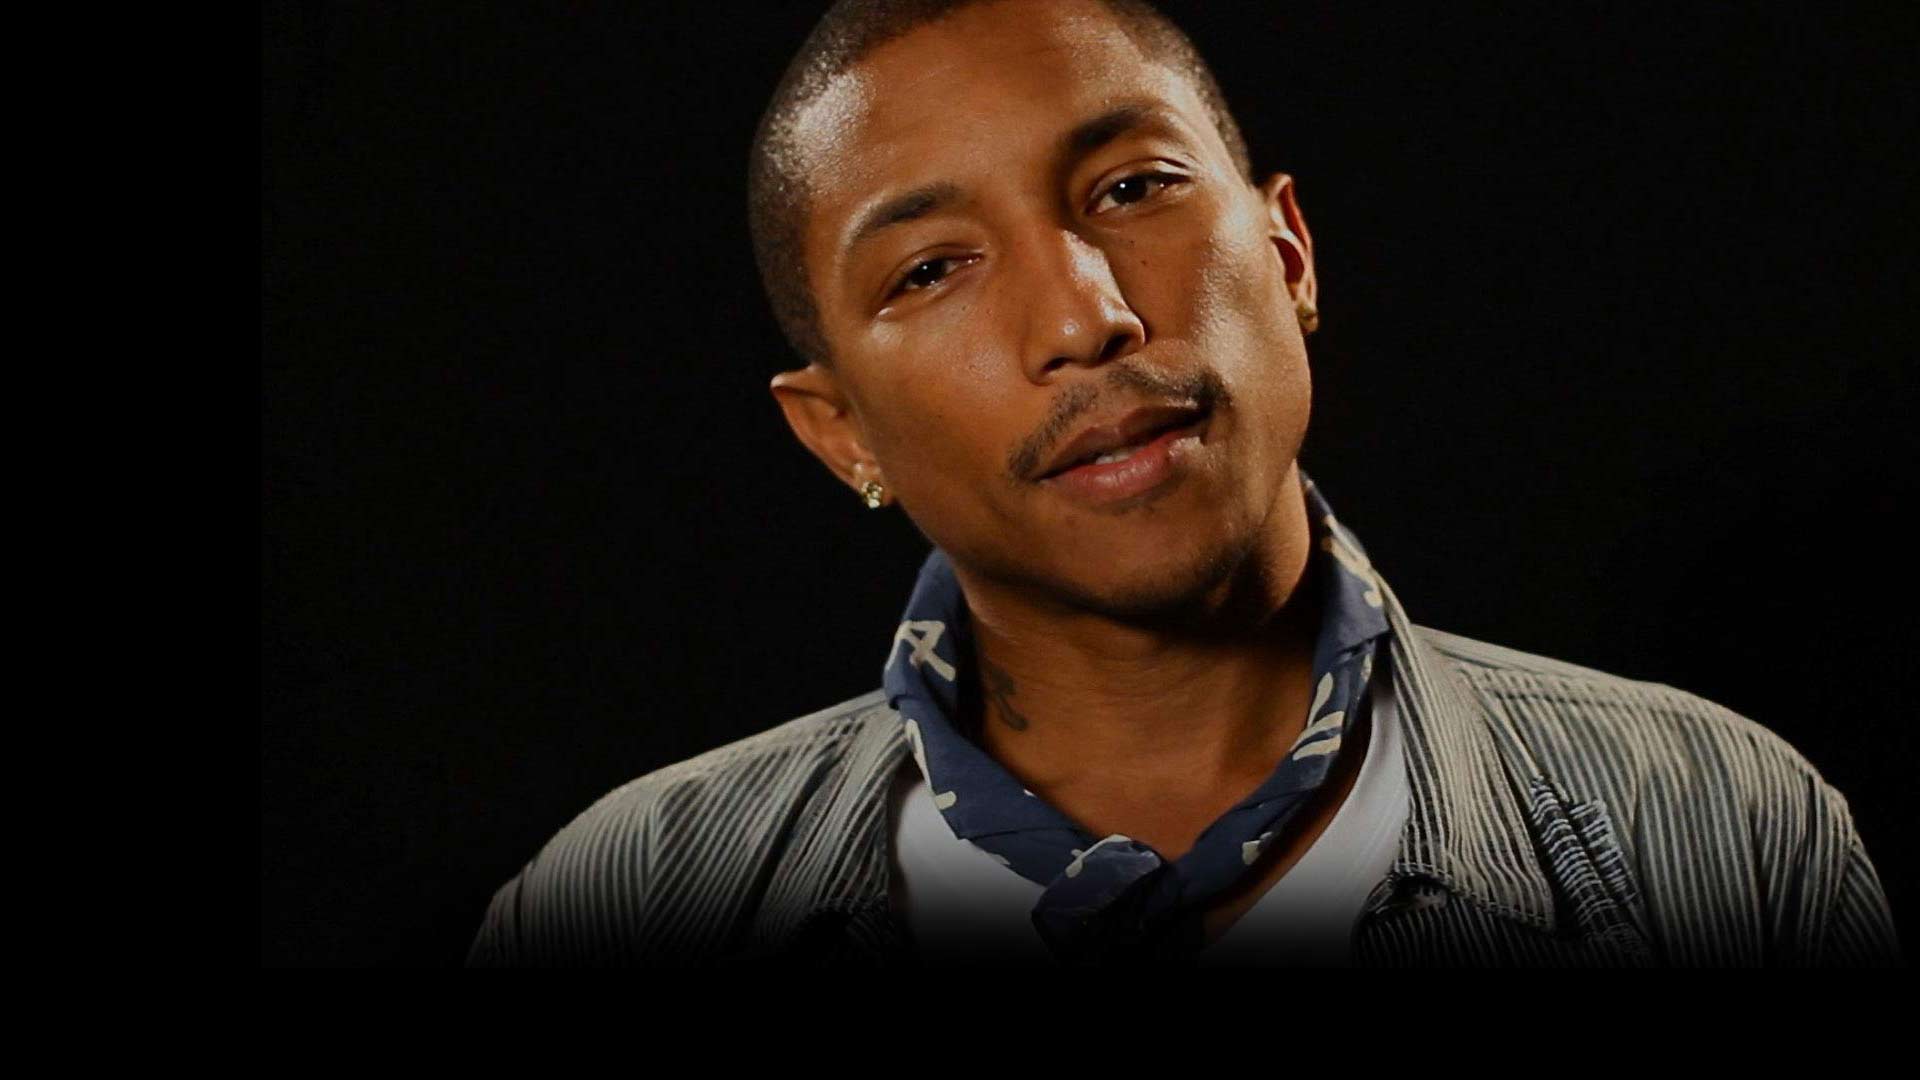 Pharrell Williams Wallpaper